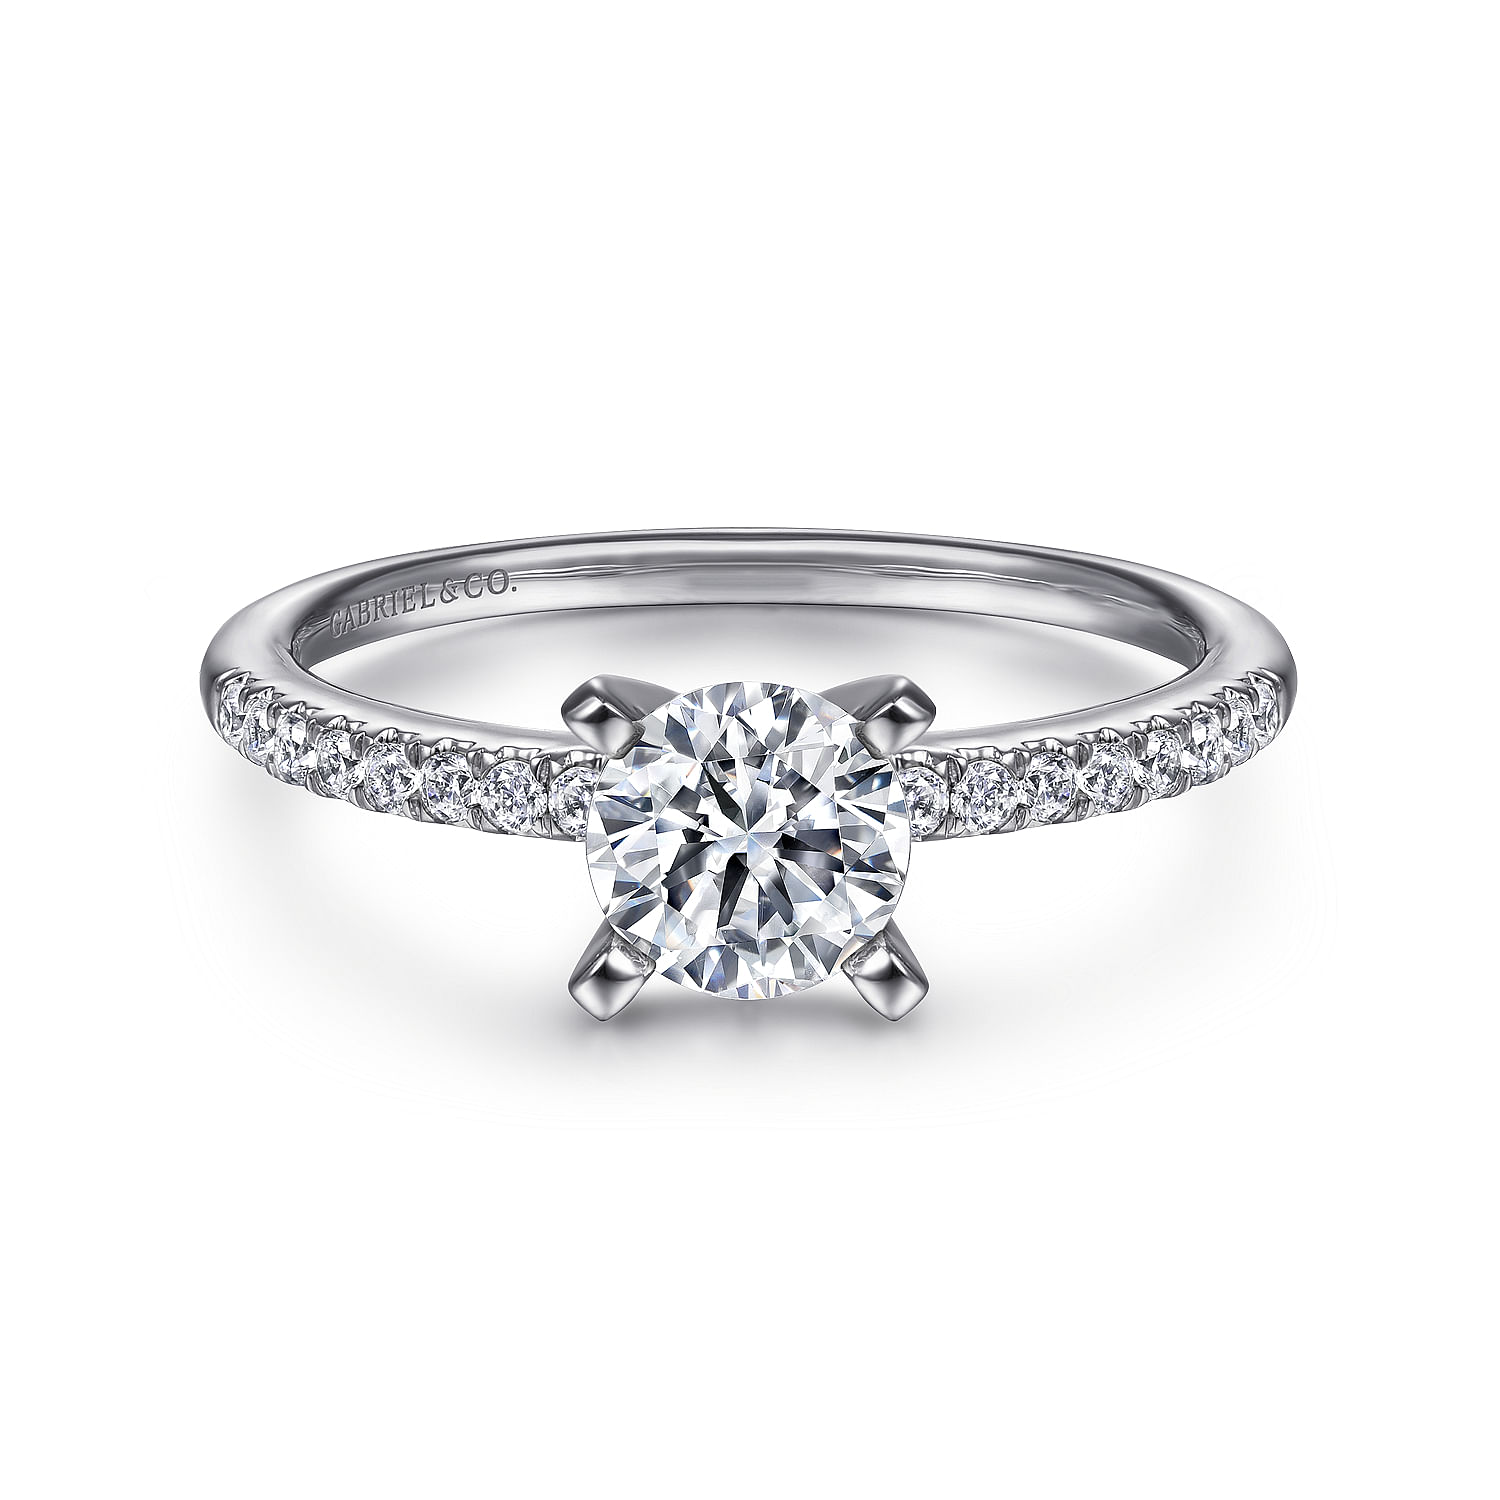 Kelly - 14K White Gold Round Diamond Engagement Ring